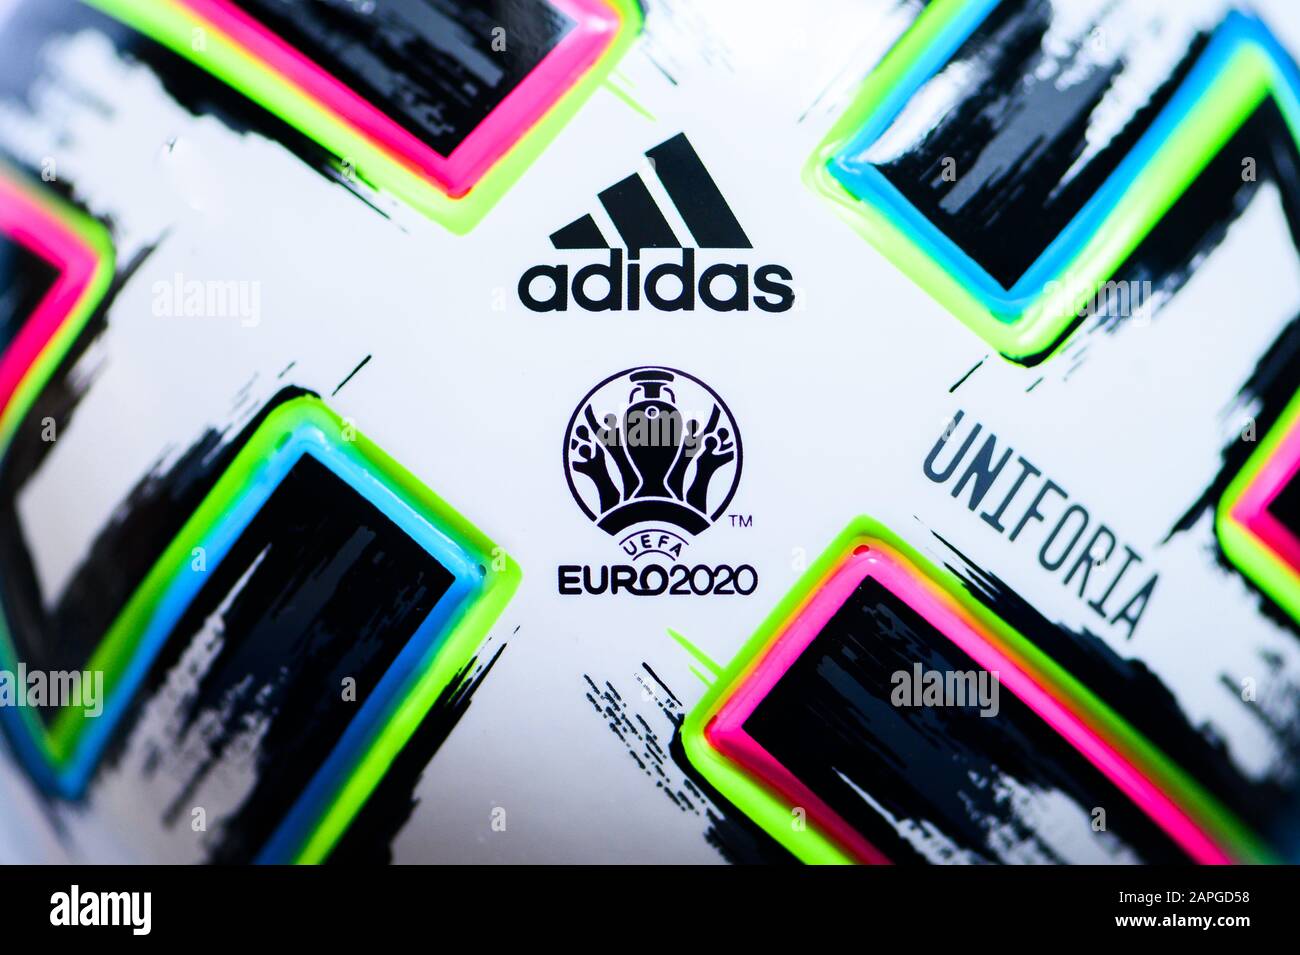 Adidas uniforia ball hi-res stock photography and images - Alamy